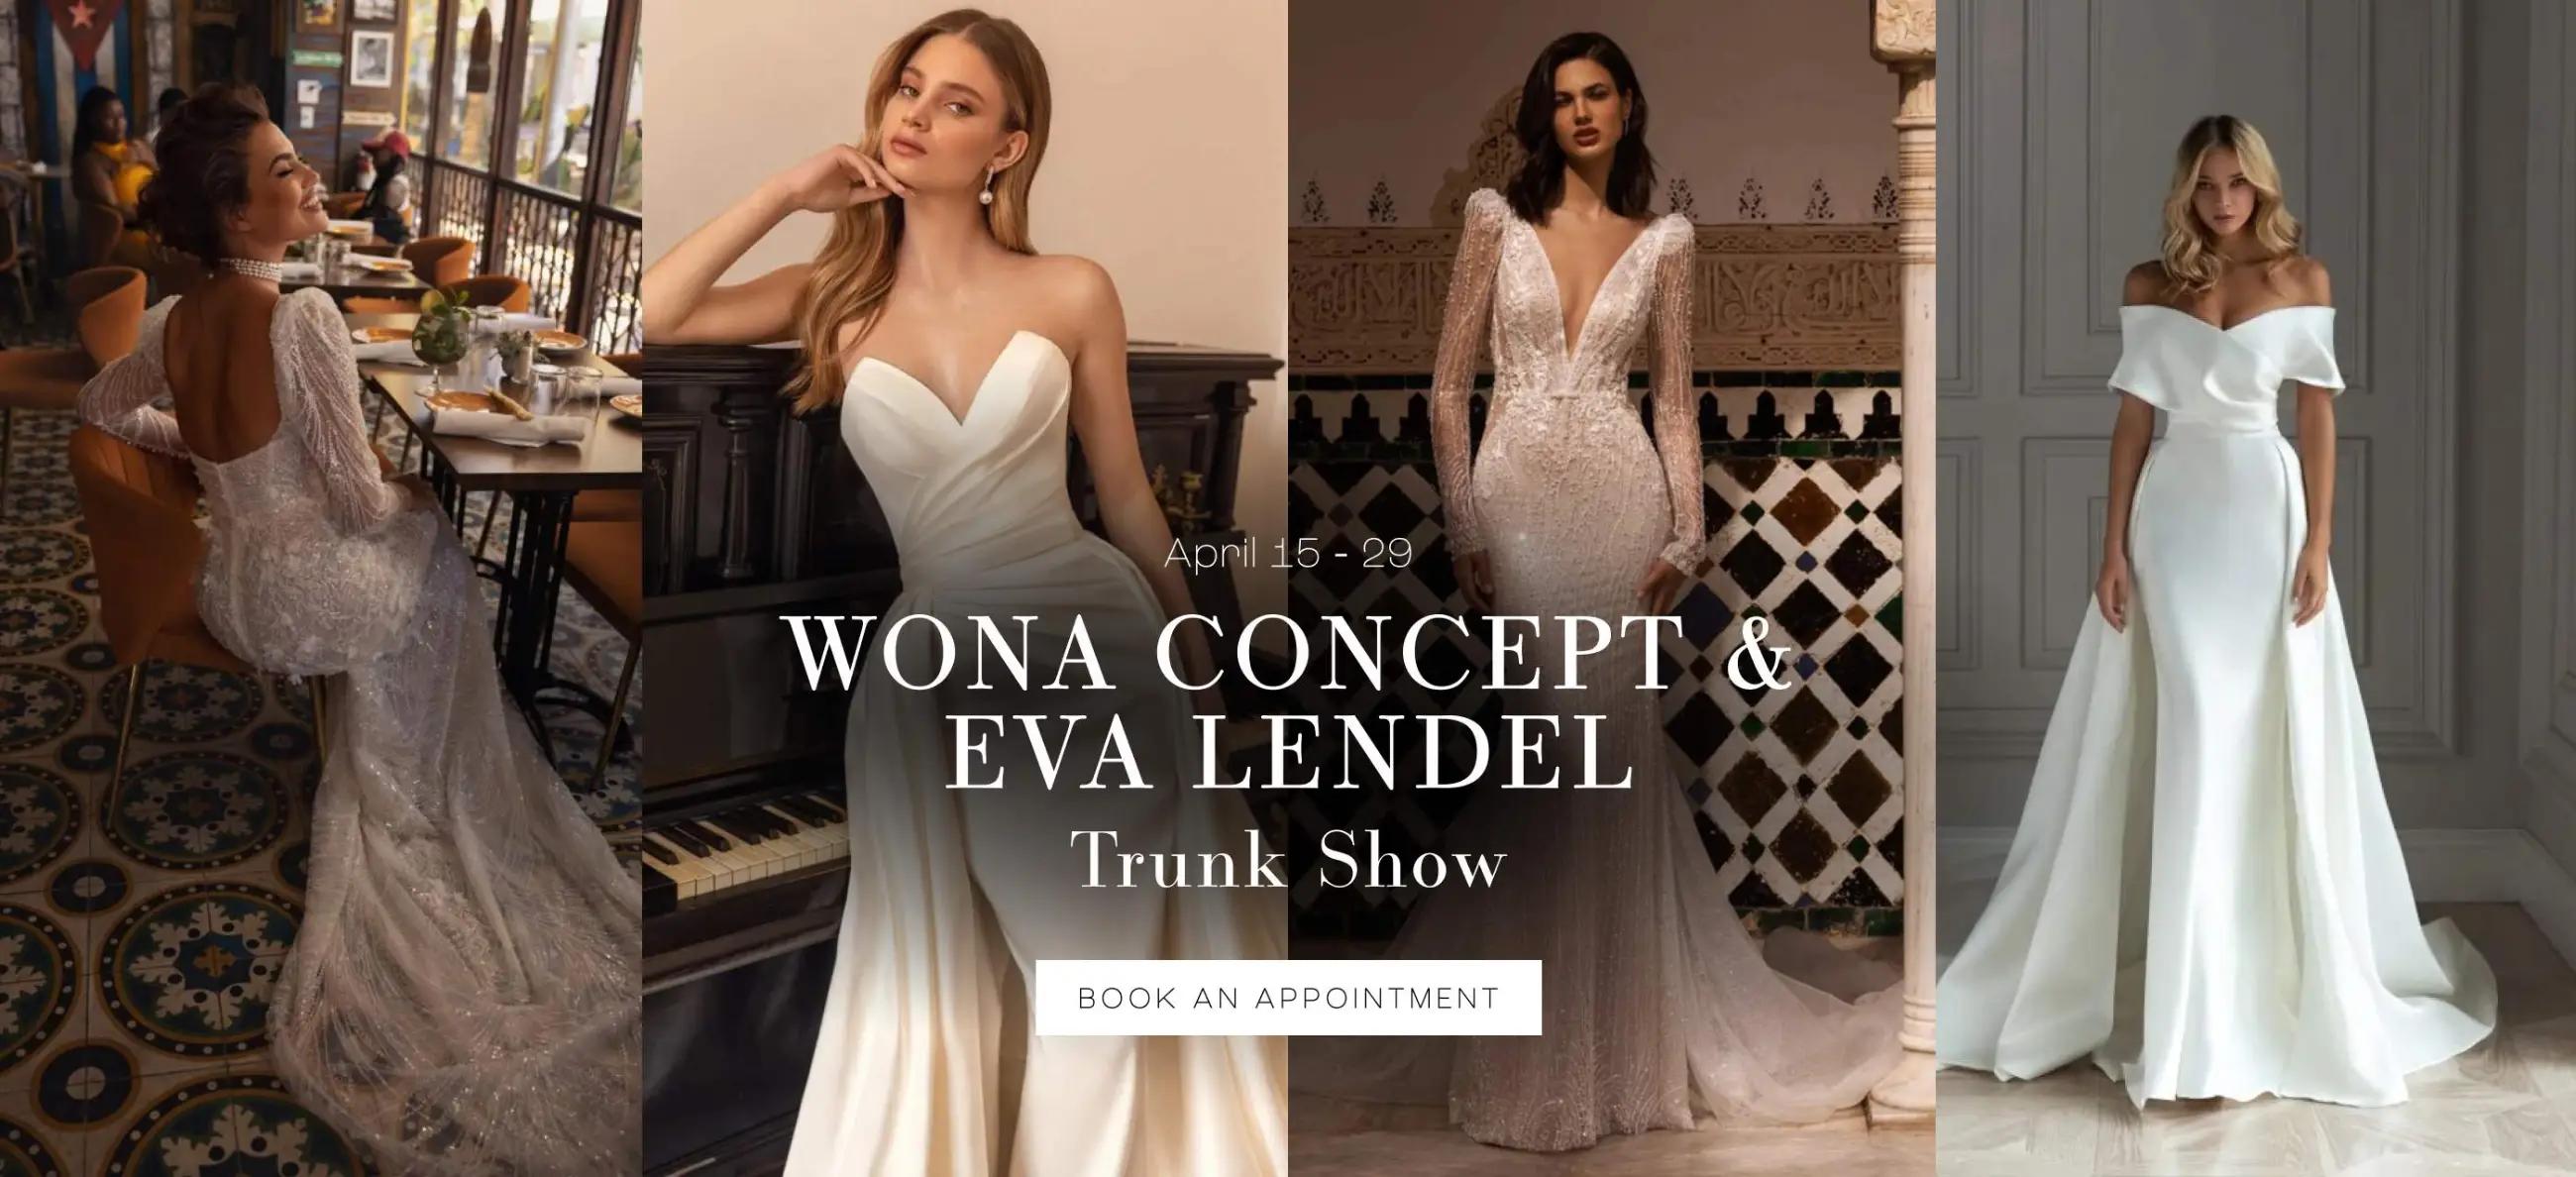 Wona Concept and Eva Lendel Event banner for desktop